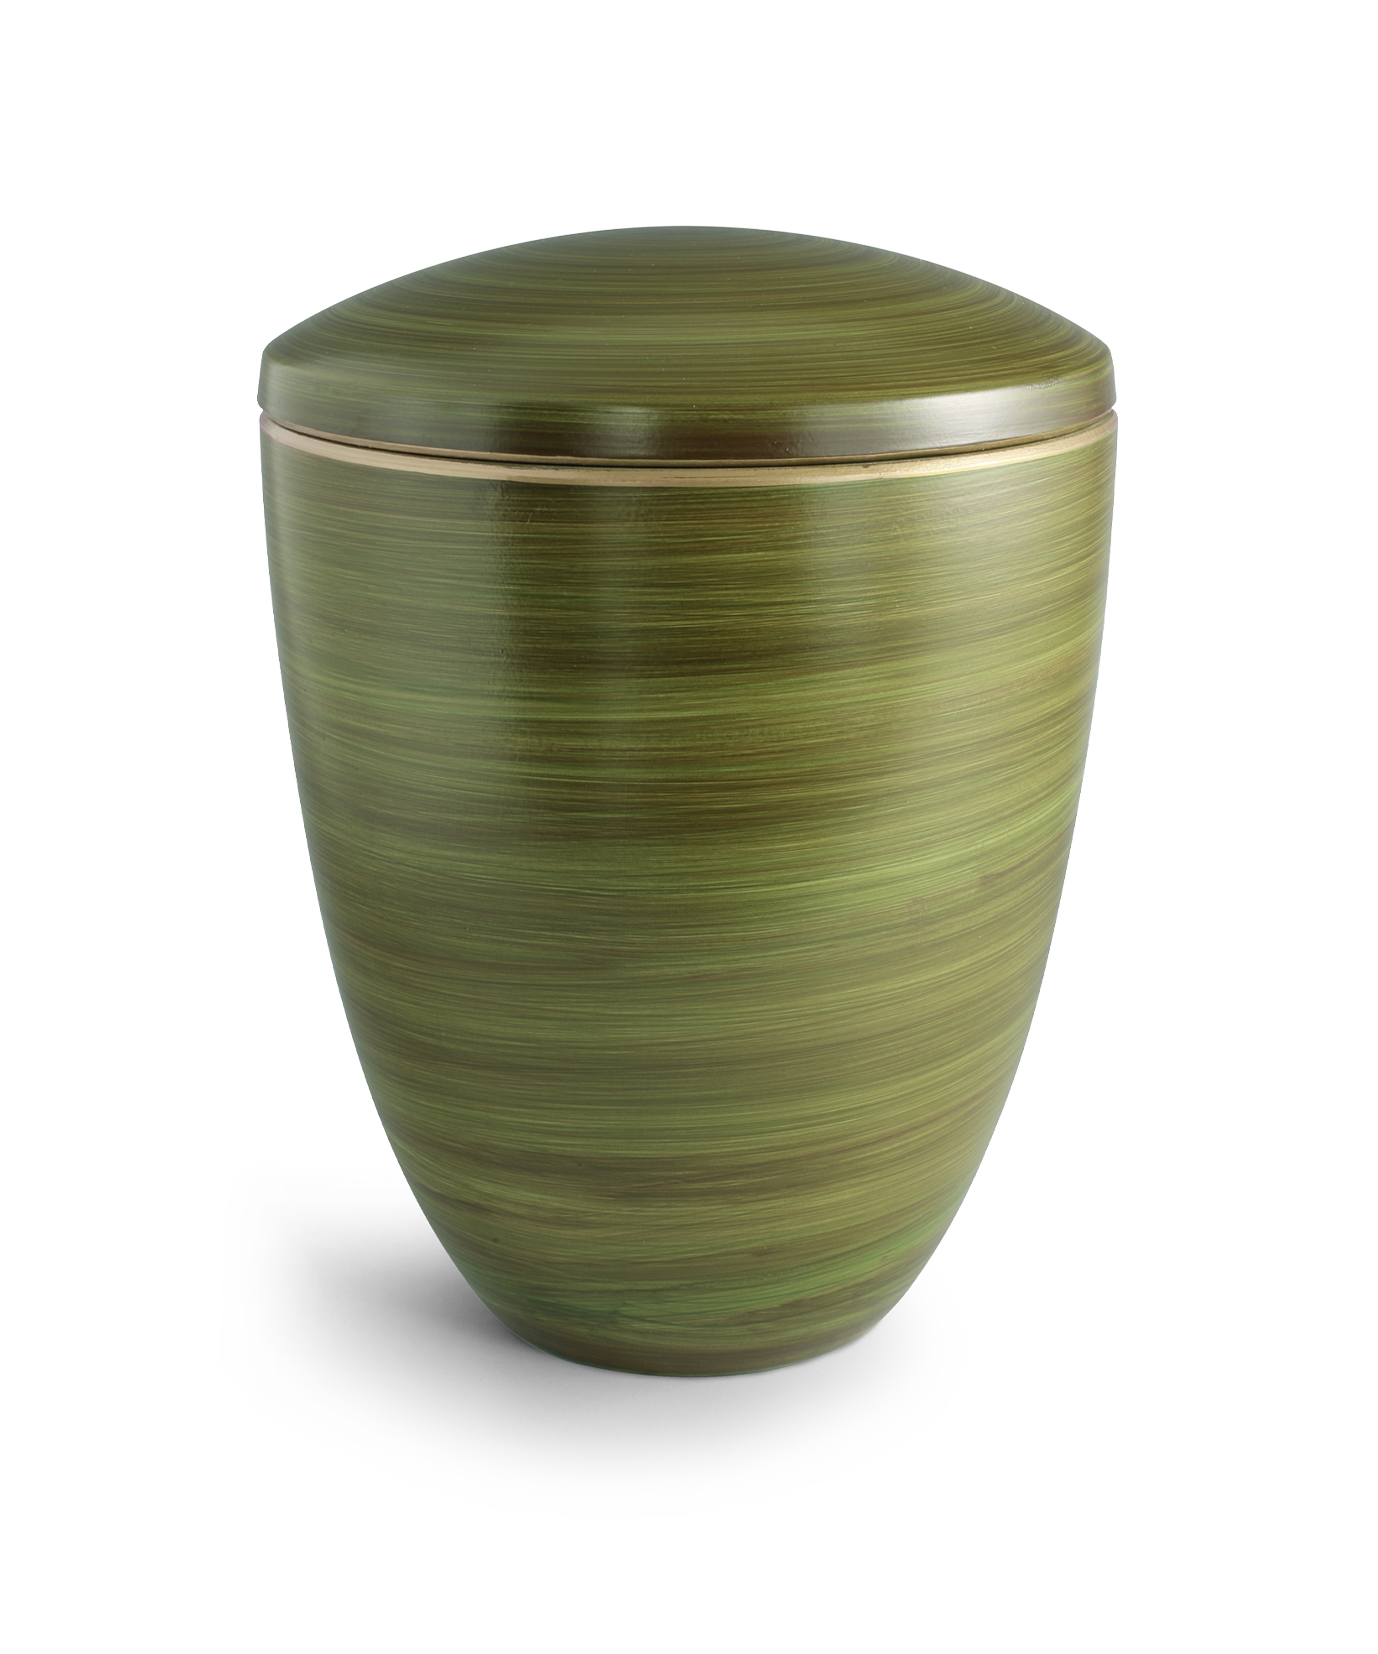 Kaufen schilfgrun Völsing Urne Edition Ceramica Keramik